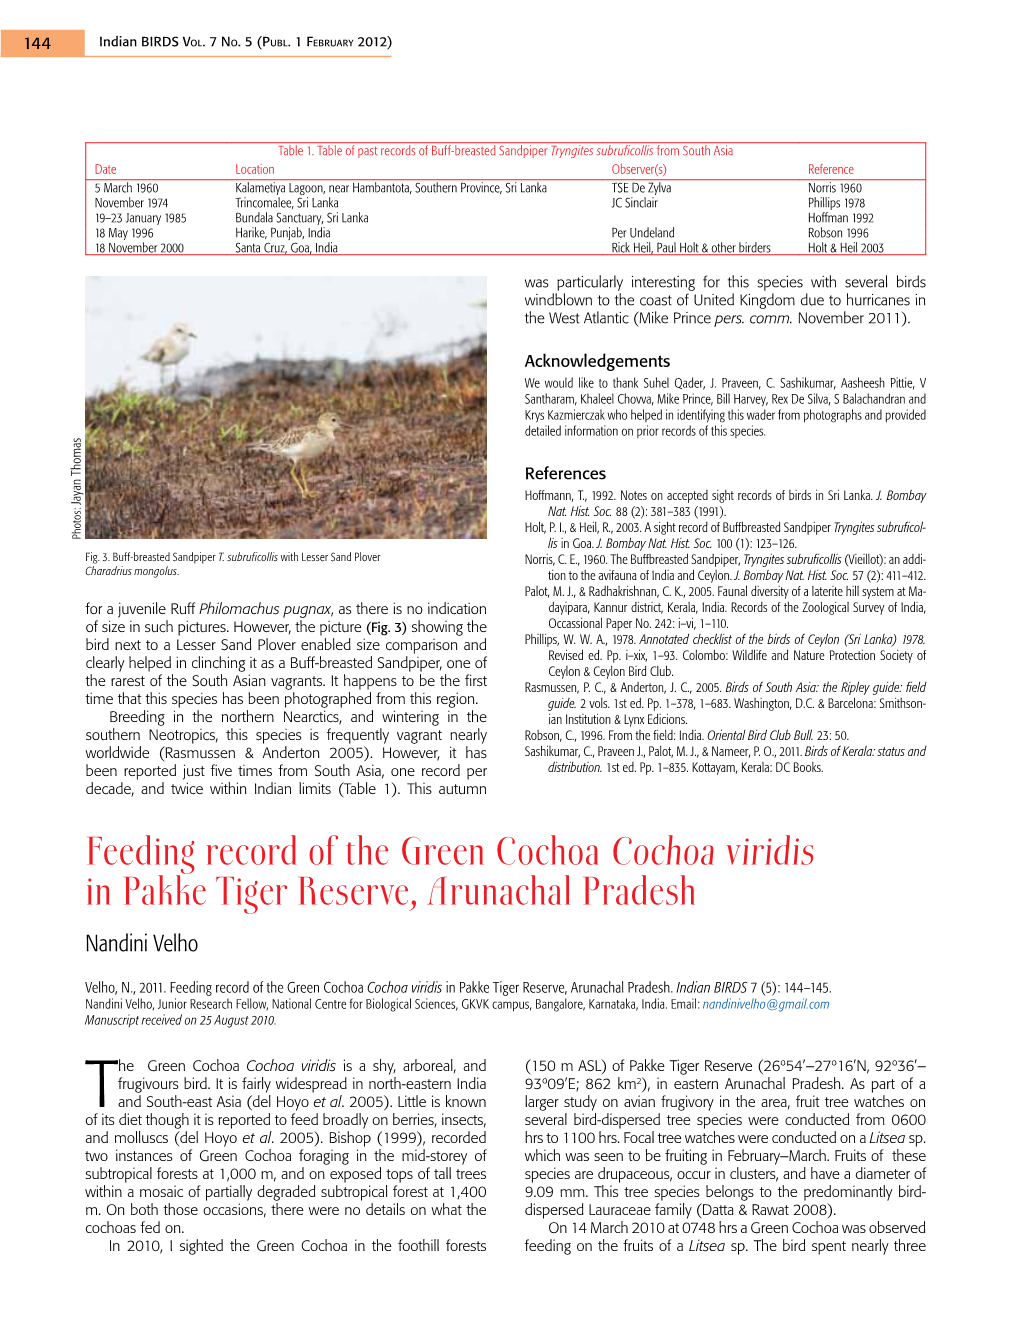 Feeding Record of the Green Cochoa Cochoa Viridis in Pakke Tiger Reserve, Arunachal Pradesh Nandini Velho